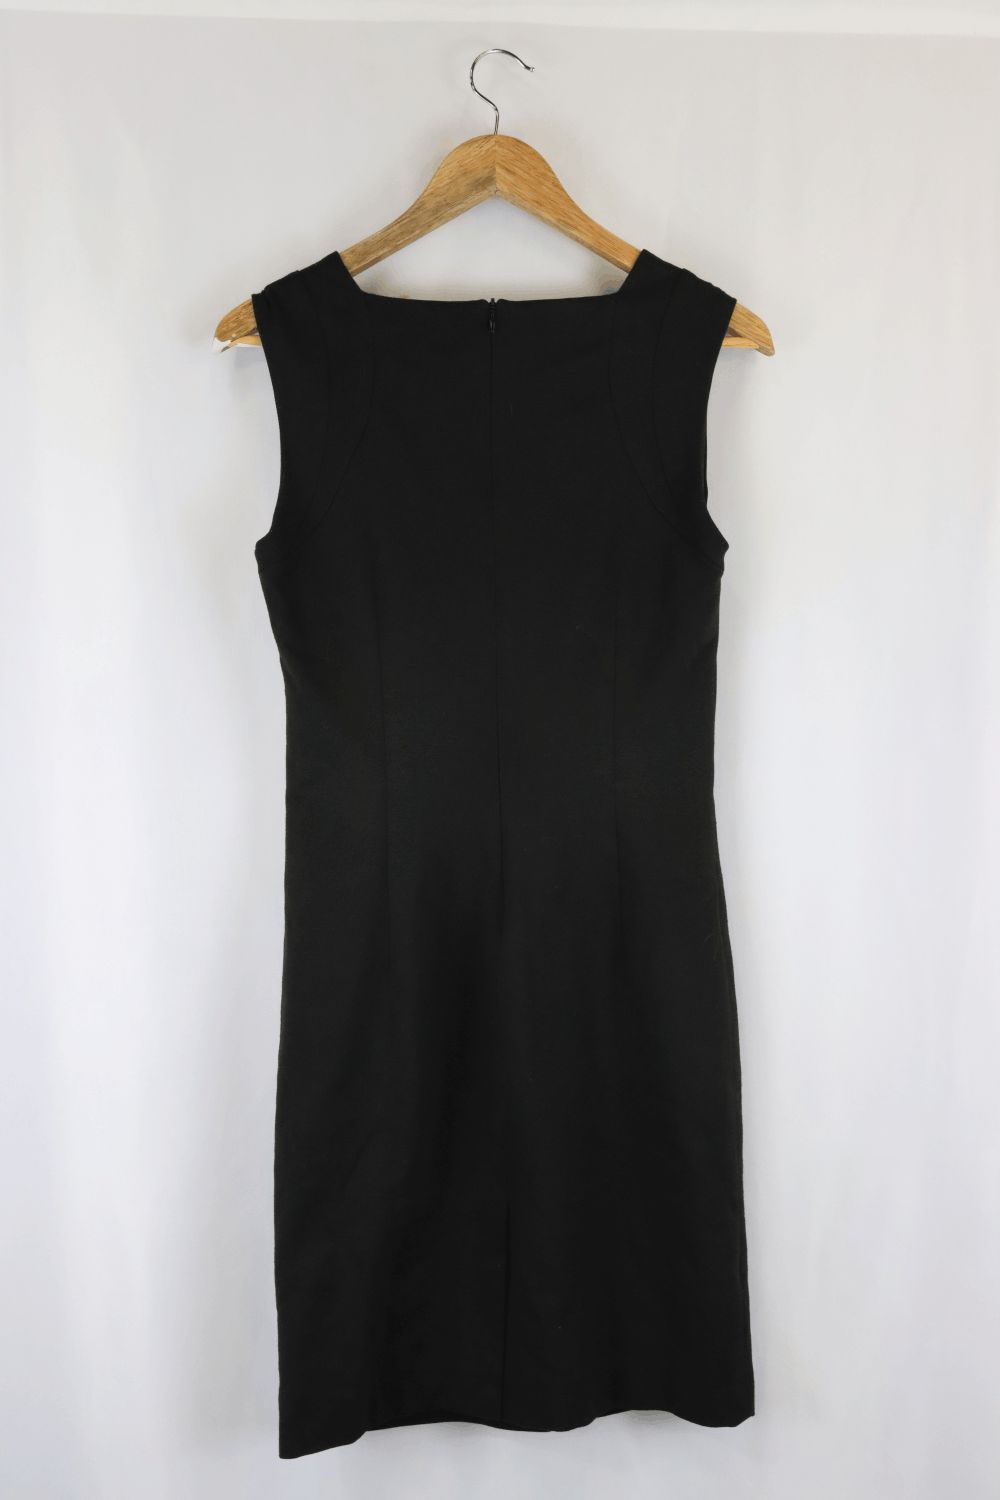 Esprit Black Dress 10